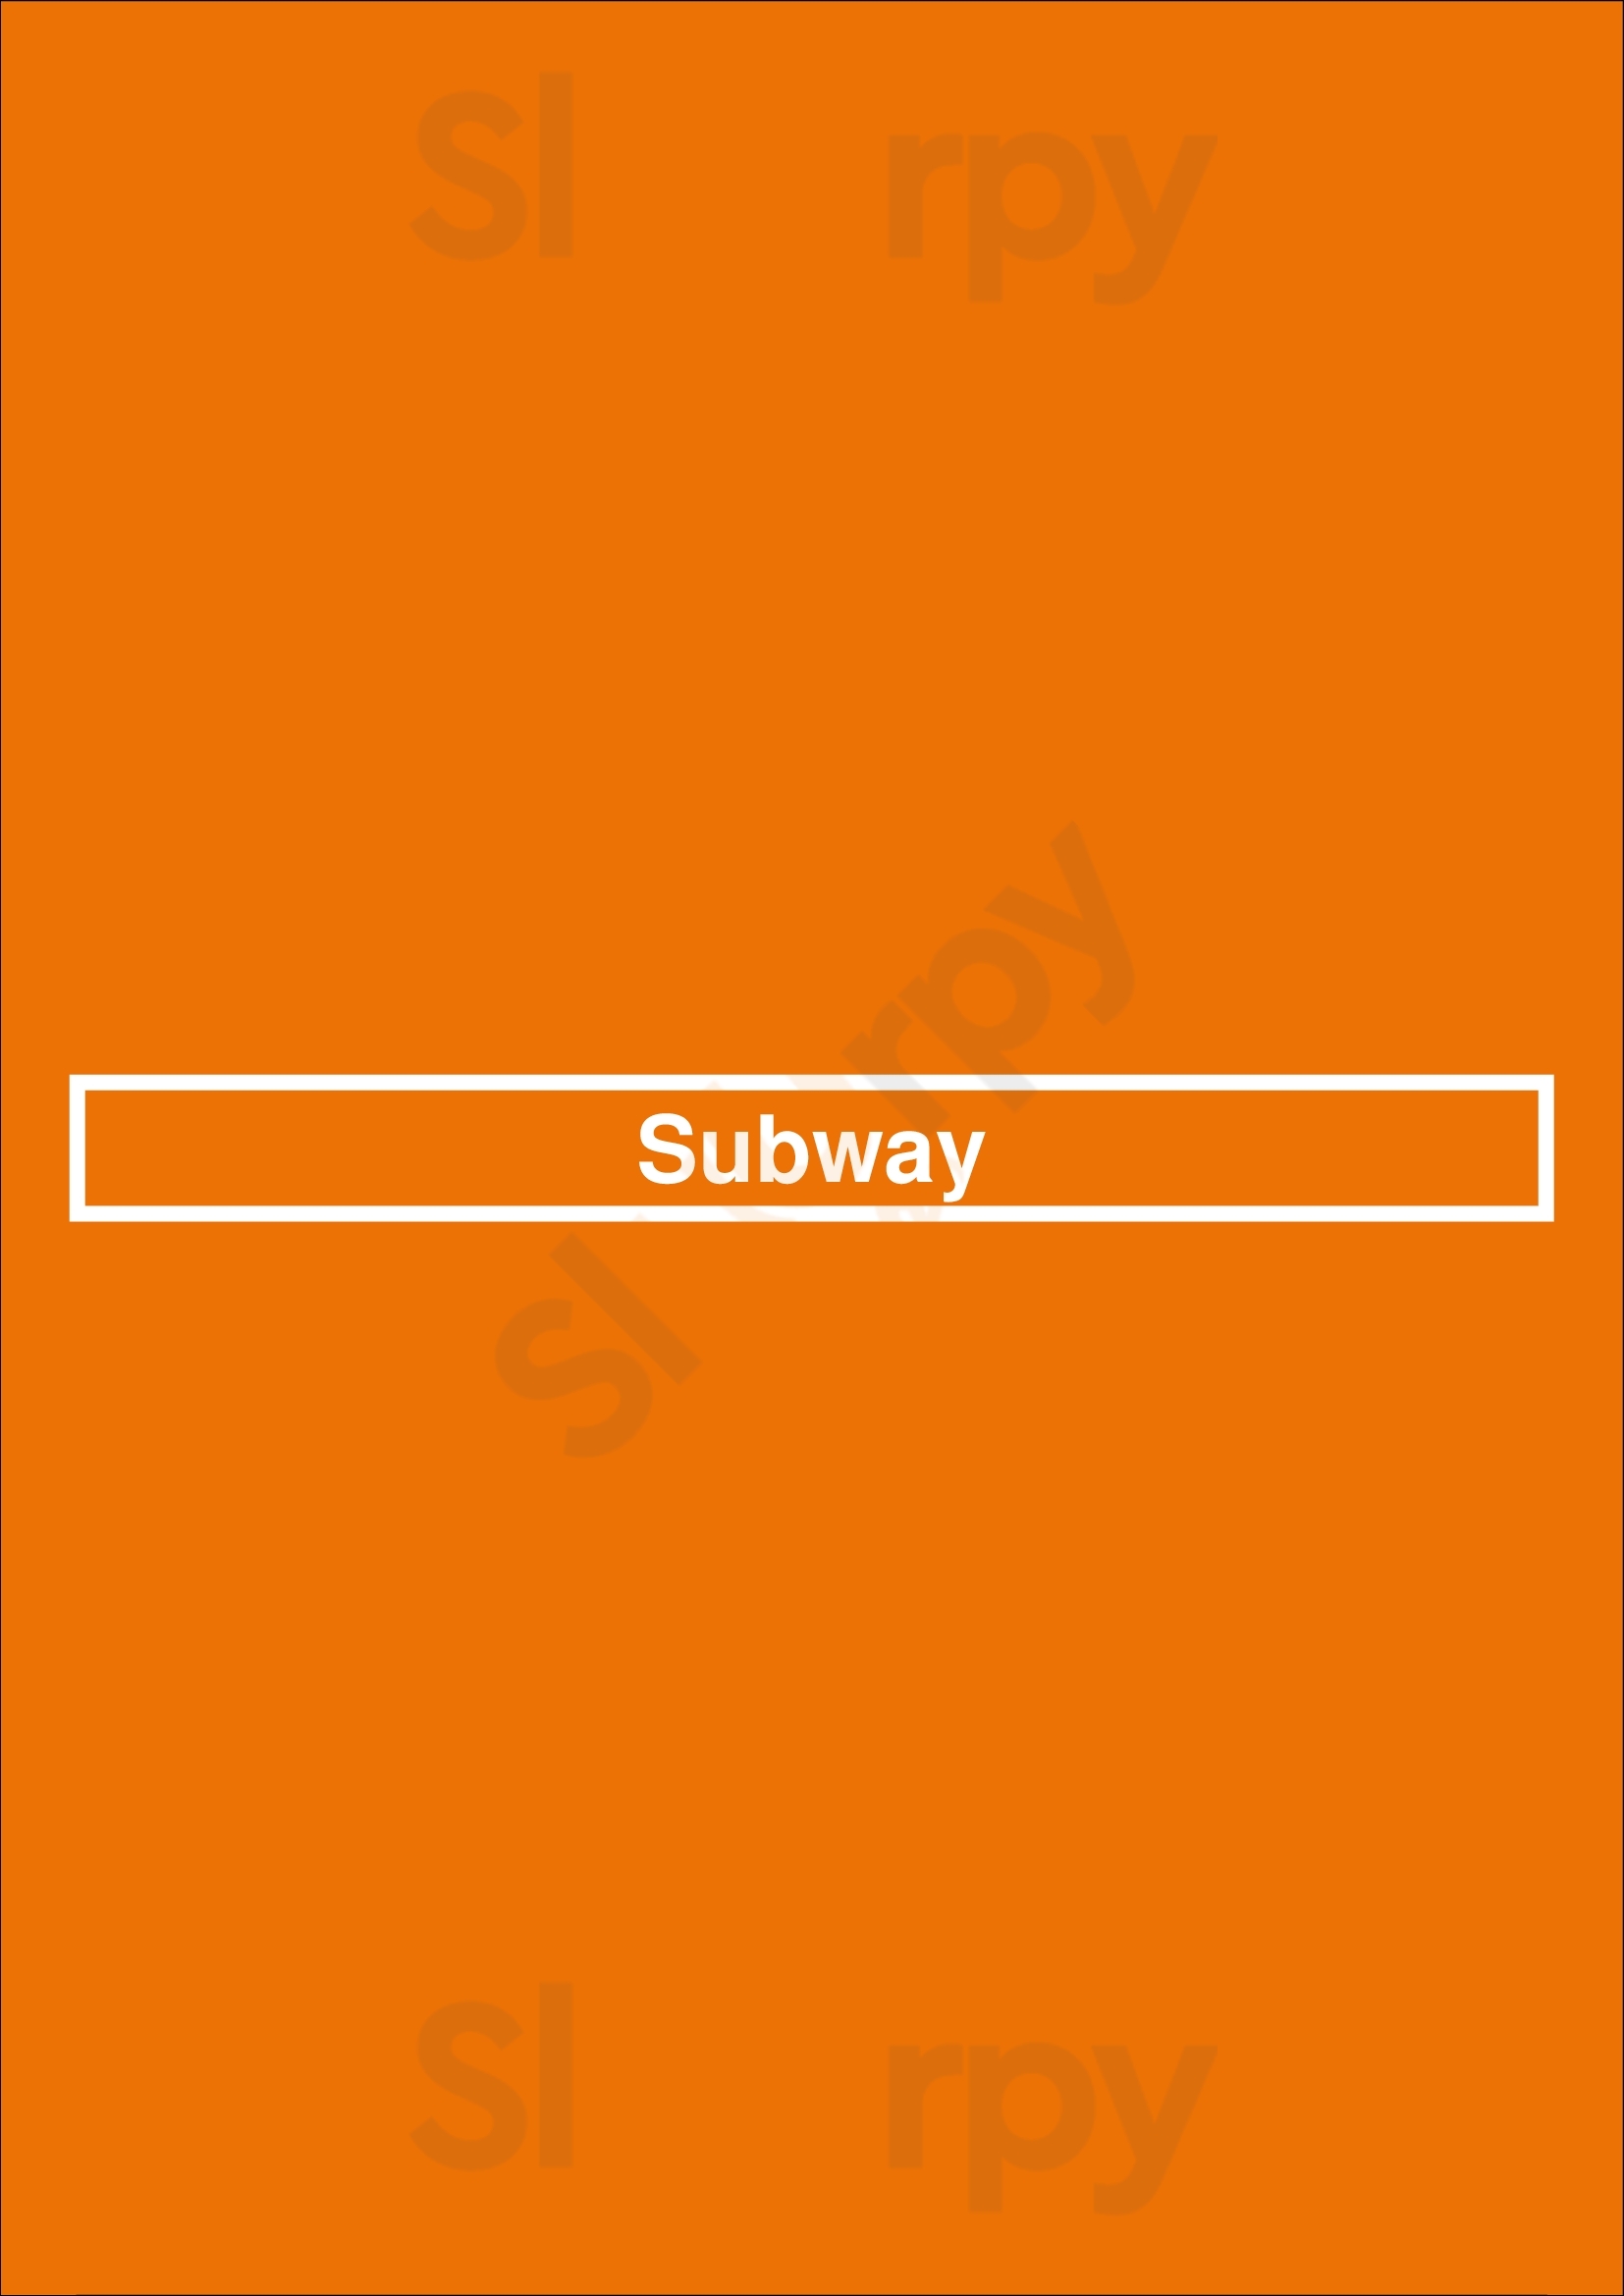 Subway London Menu - 1